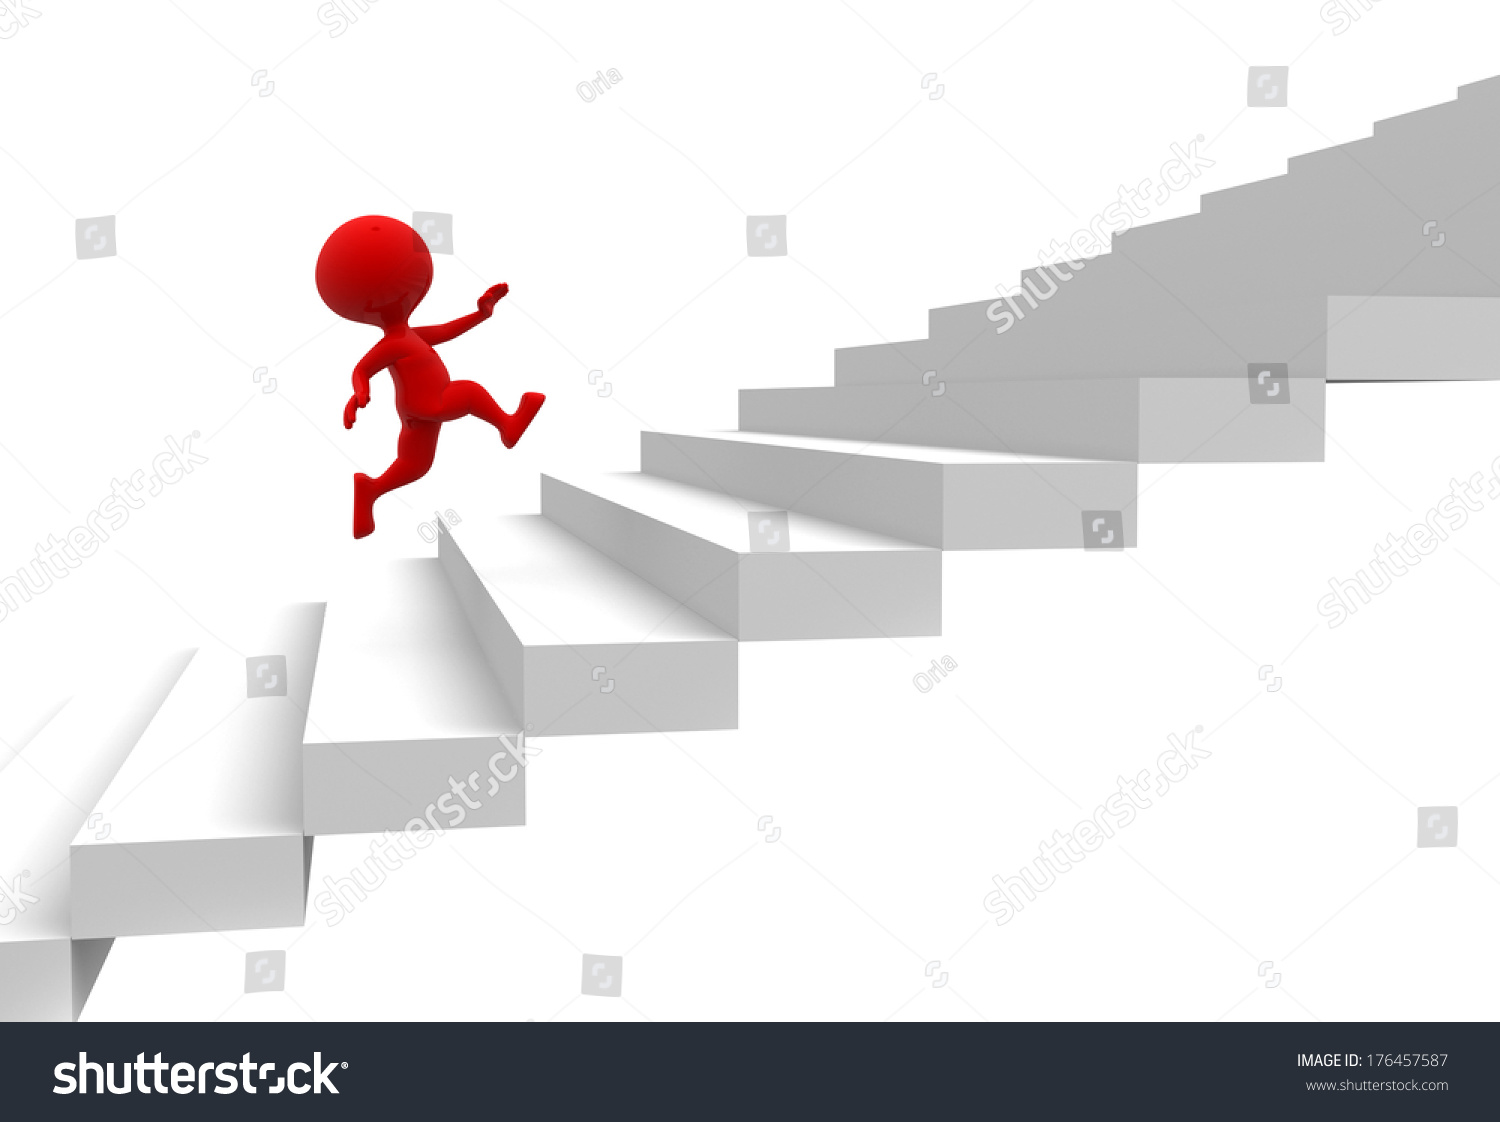 Человечек идет по лестнице